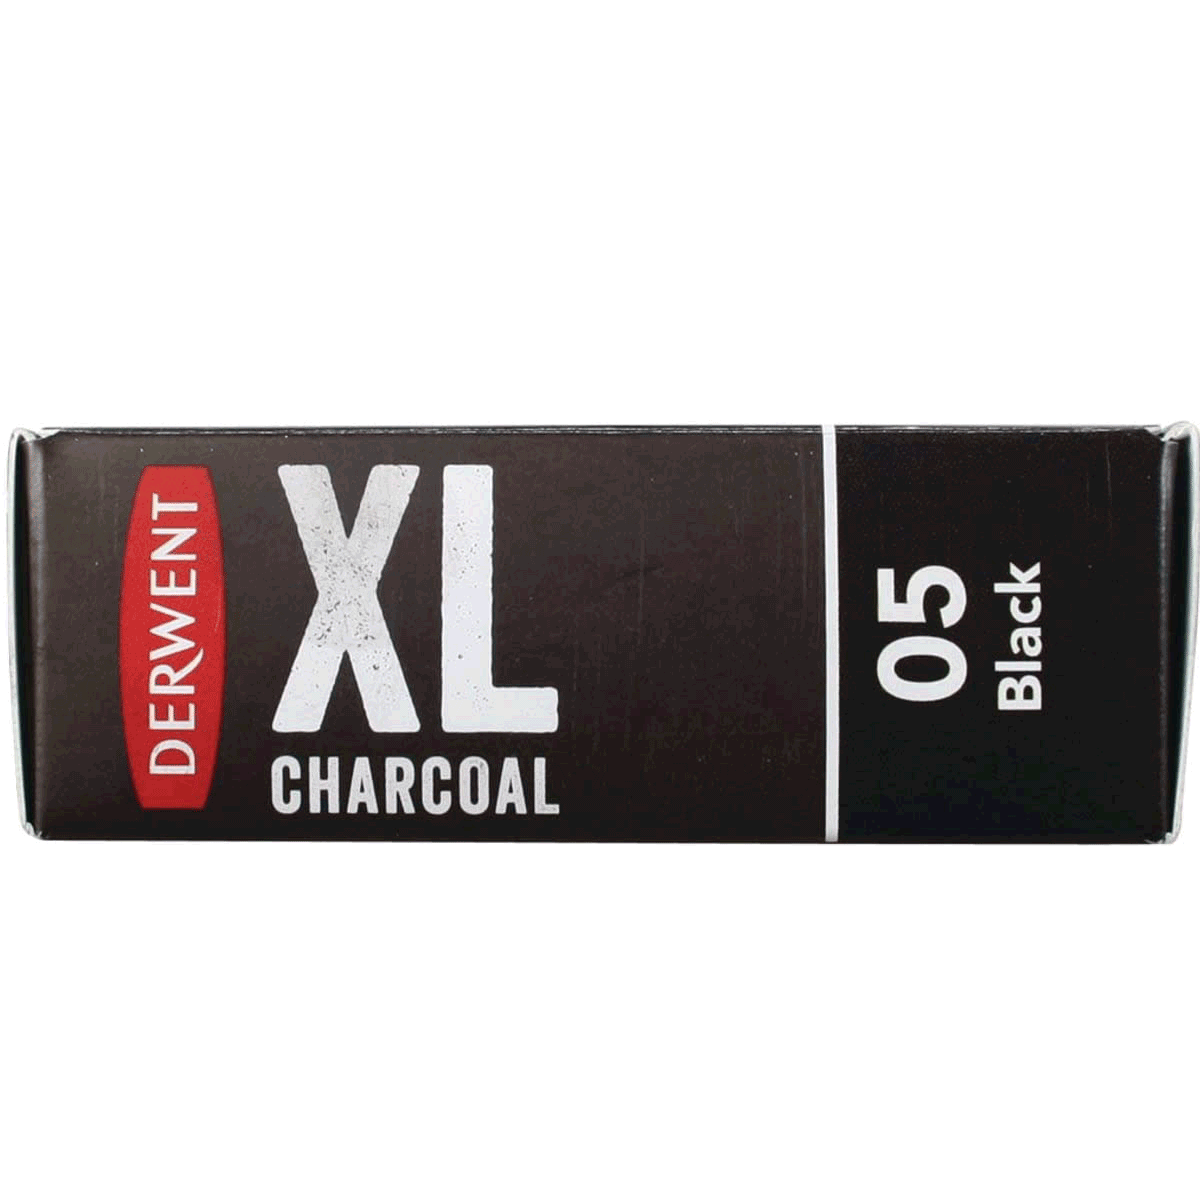 Derwent XL Charcoal Block Black 05